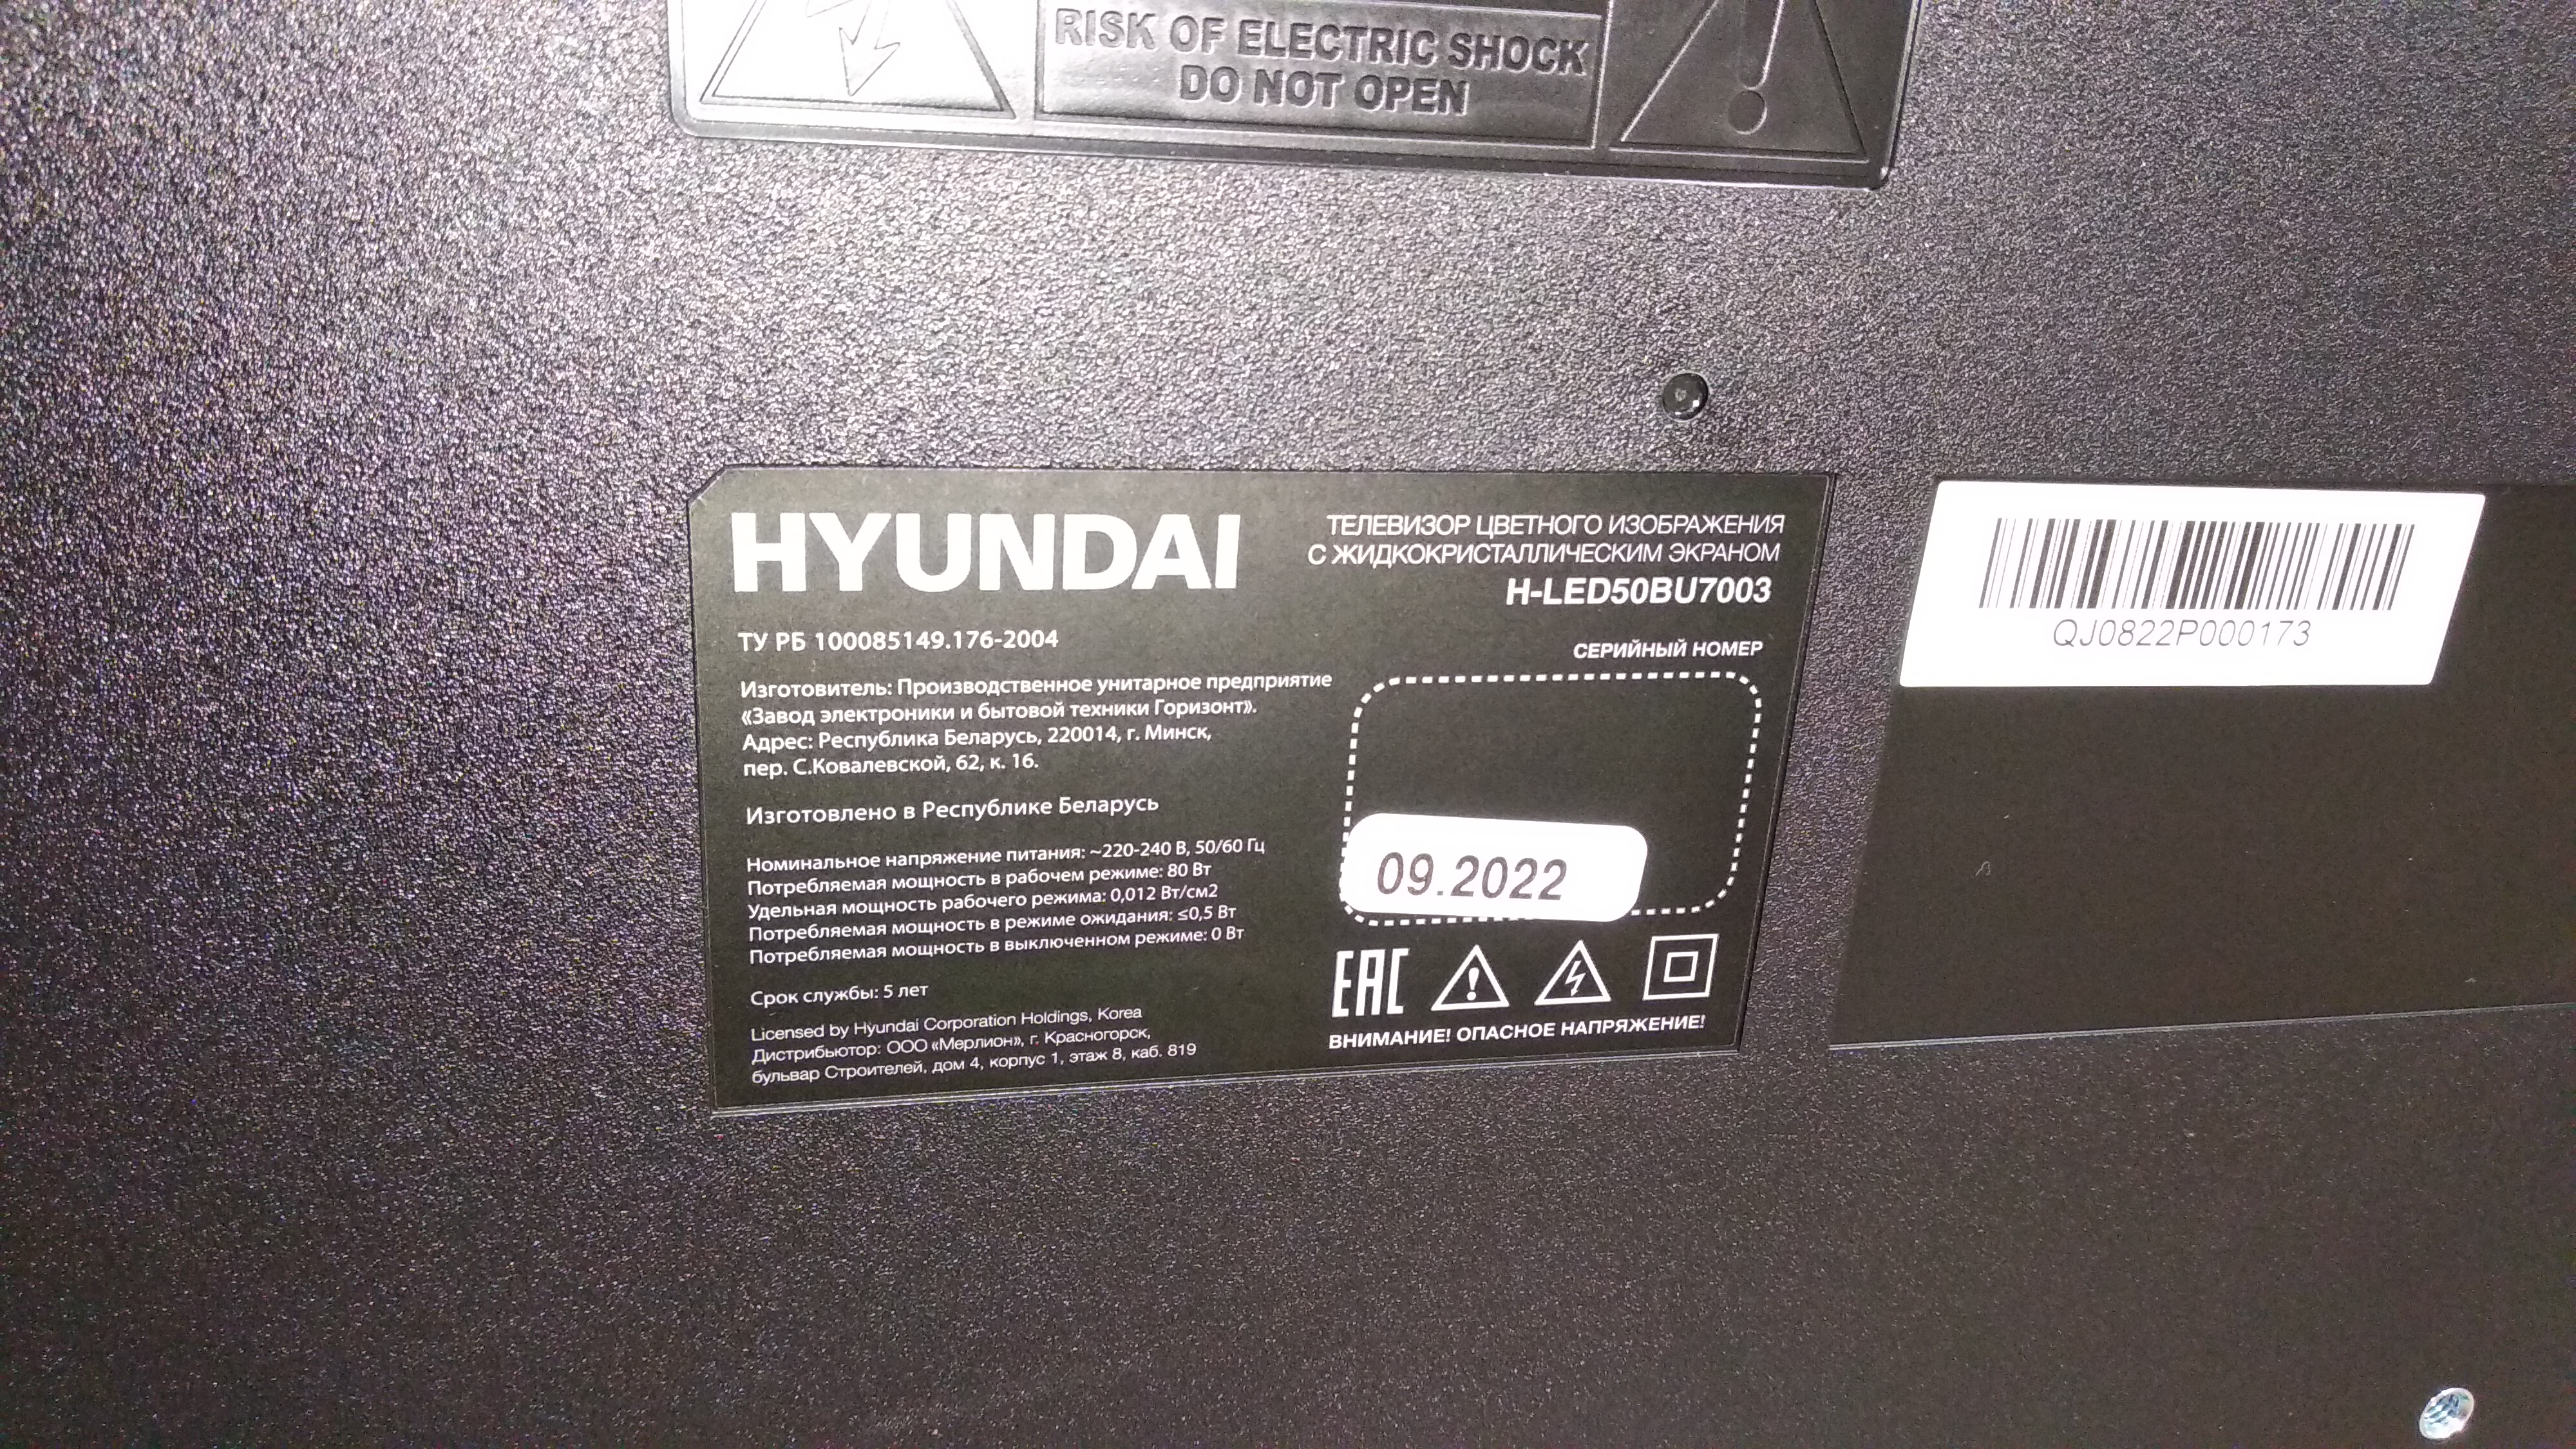 Led43bu7006 телевизор hyundai. Телевизор Hyundai 50 h-led50bu7003 как включить Miracast. Hyundai h-led50bu7003 50 угол обзора фото.